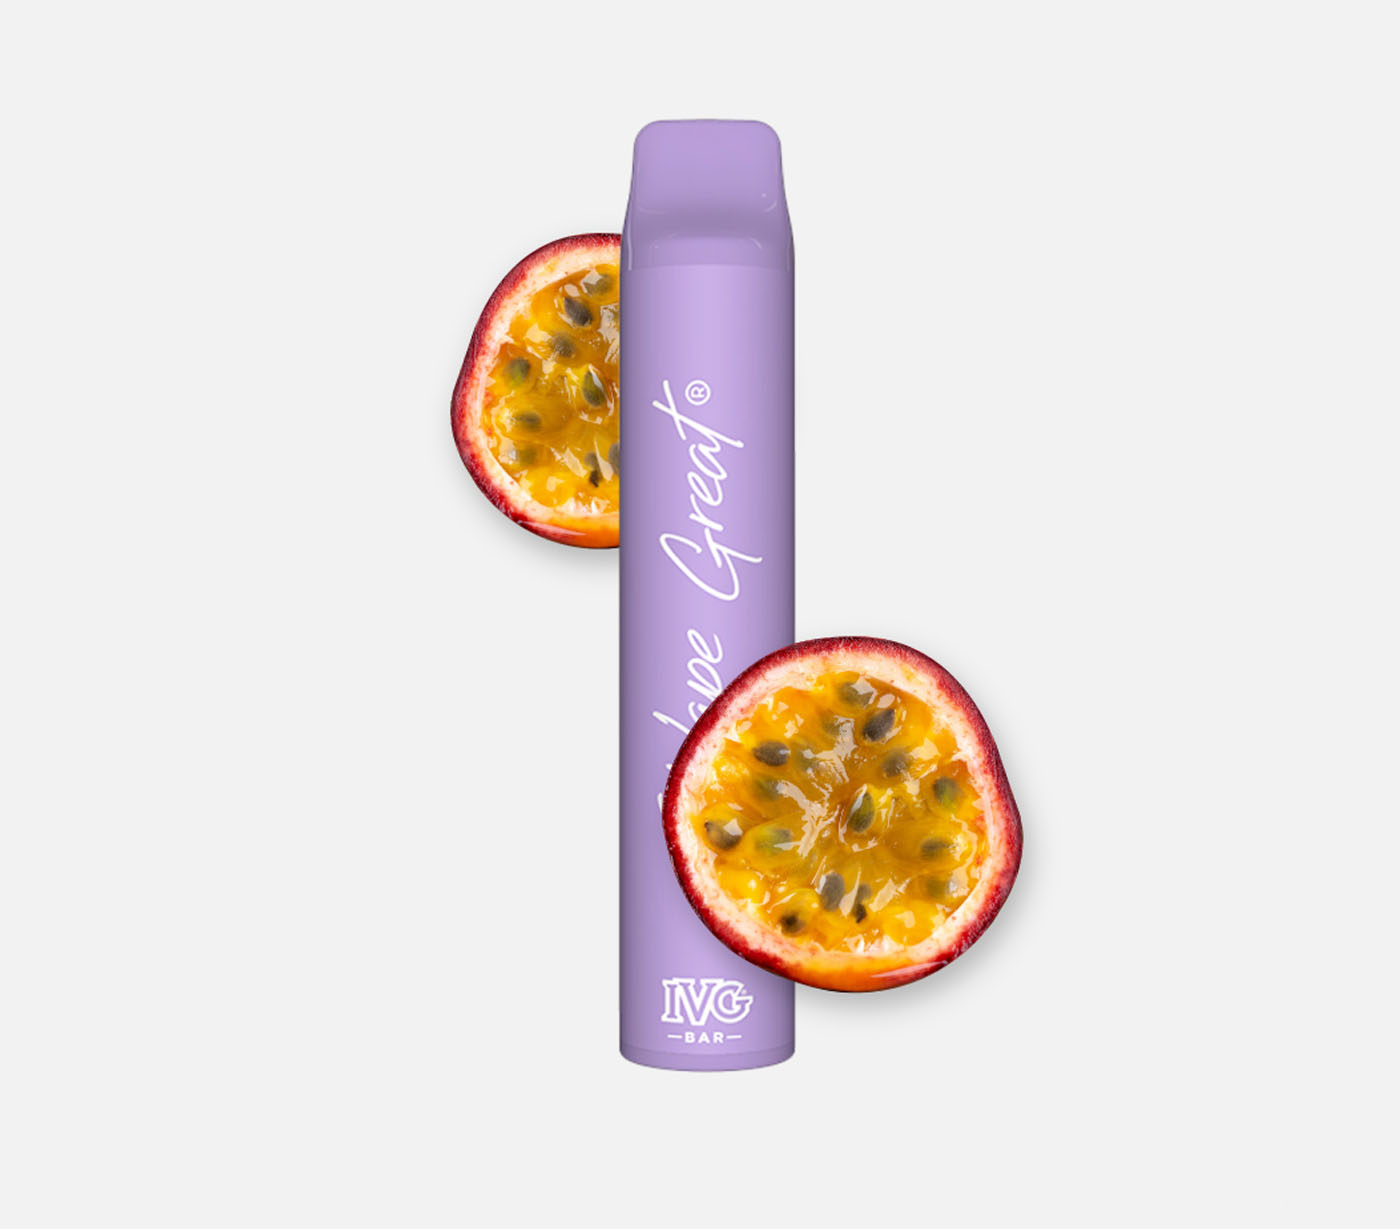 IVG Bar - Passion Fruit